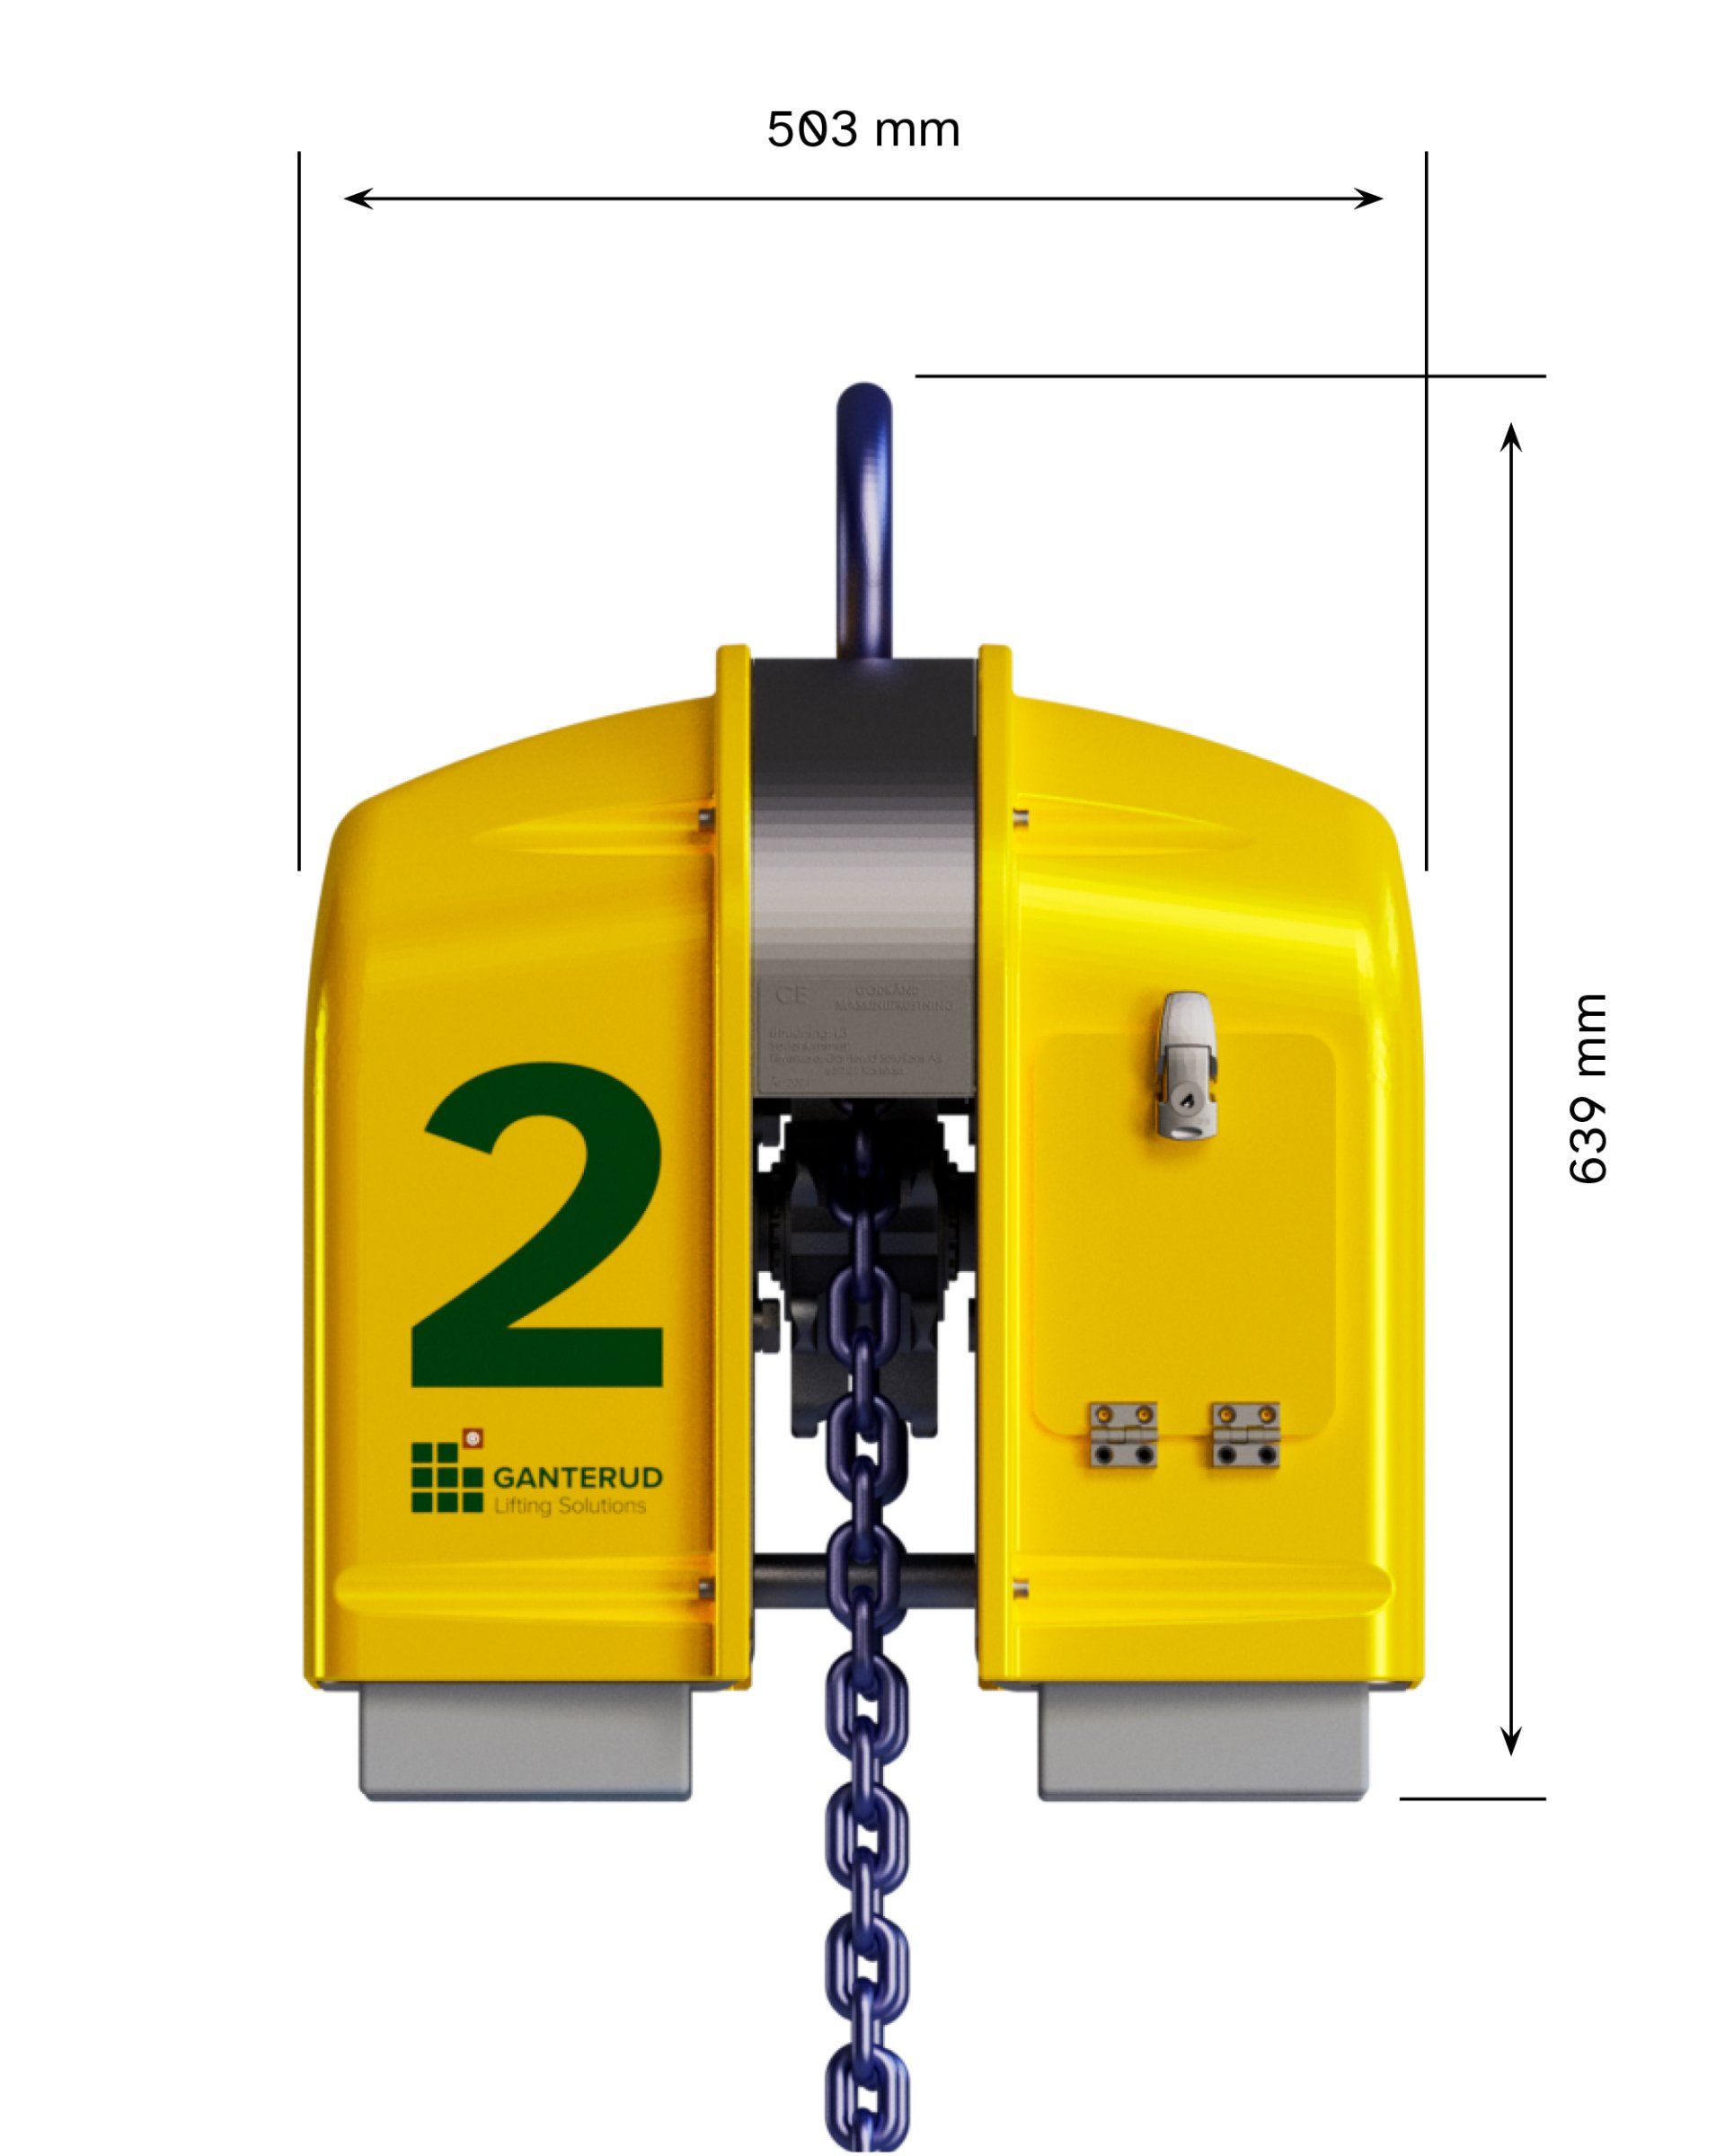 Ganterud L3 Lifting yoke measurements